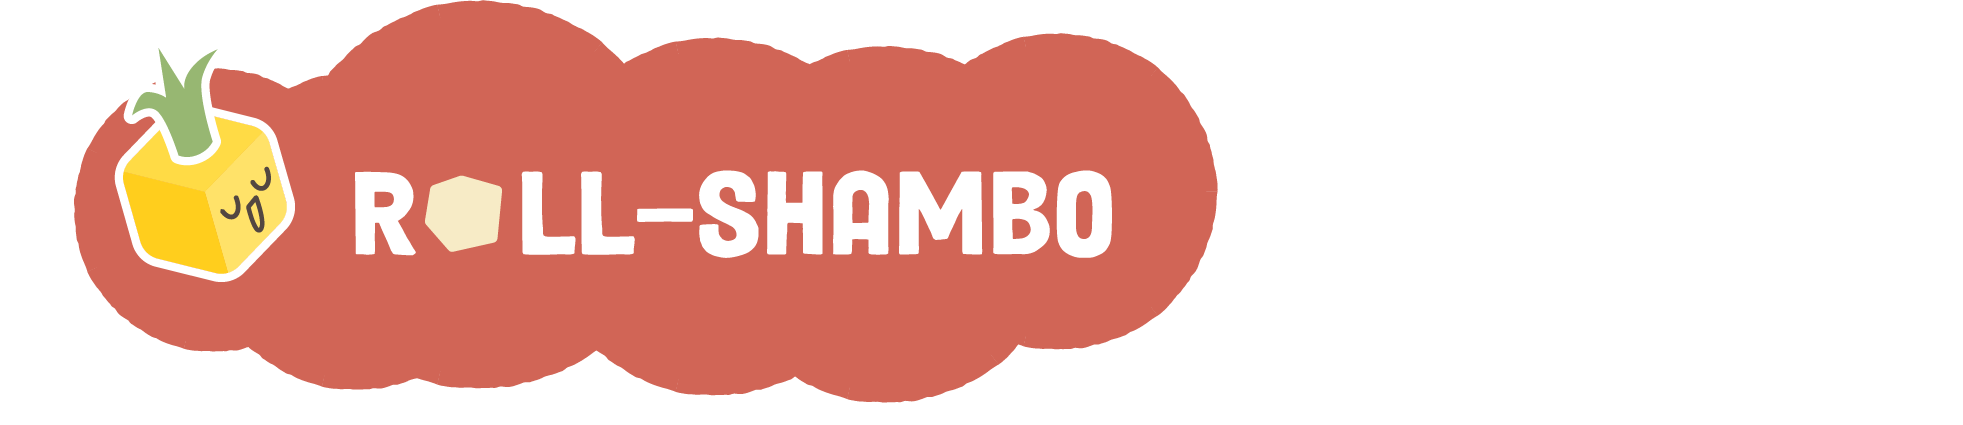 ROLL-SHAMBO